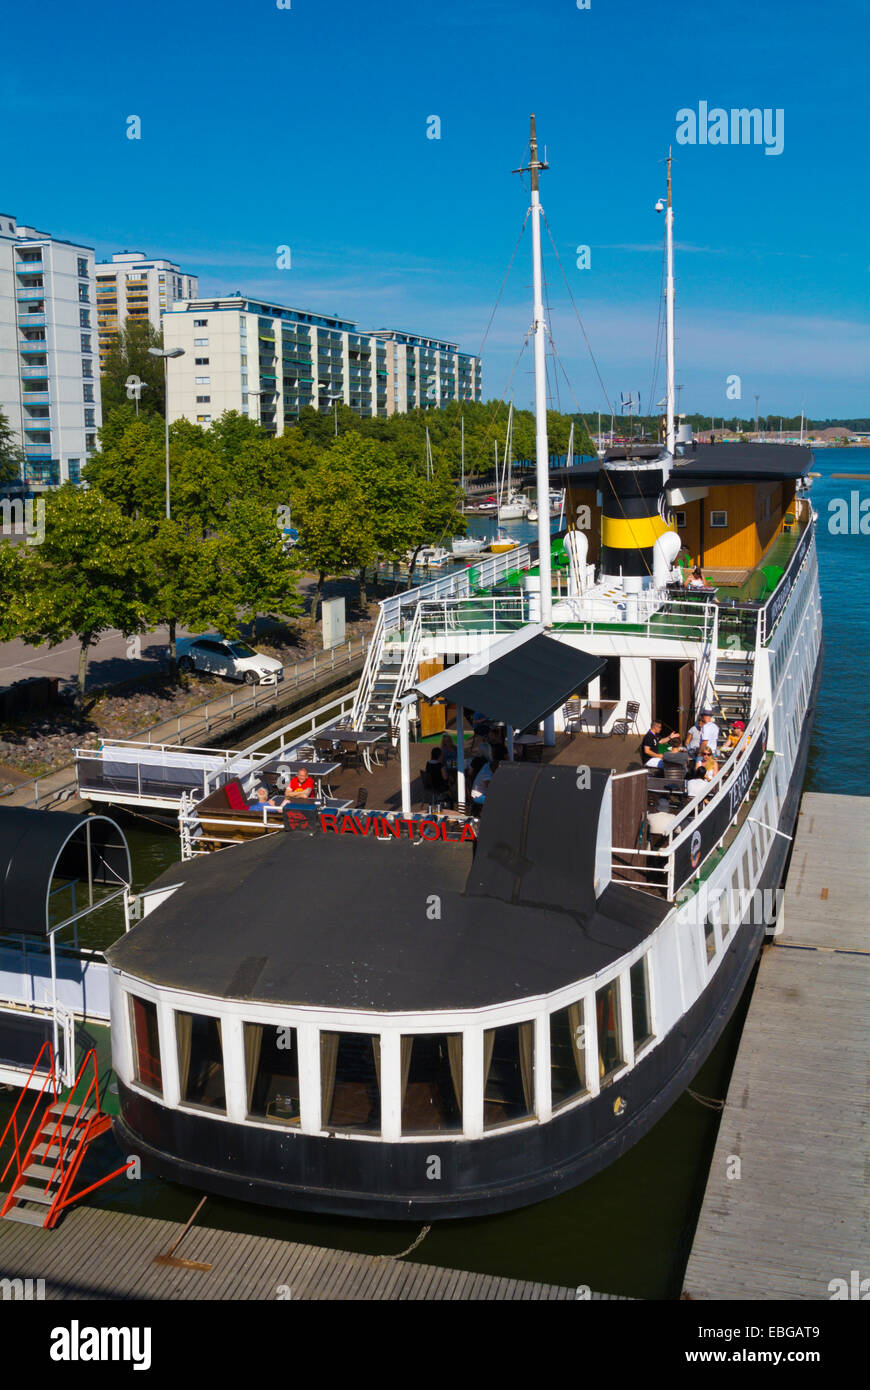 Ravintolalaiva Väiski, Boat Restaurant, in front of Hakaniemi market square and Merihaka suburb, Helsinki, Finland, Europe Stock Photo